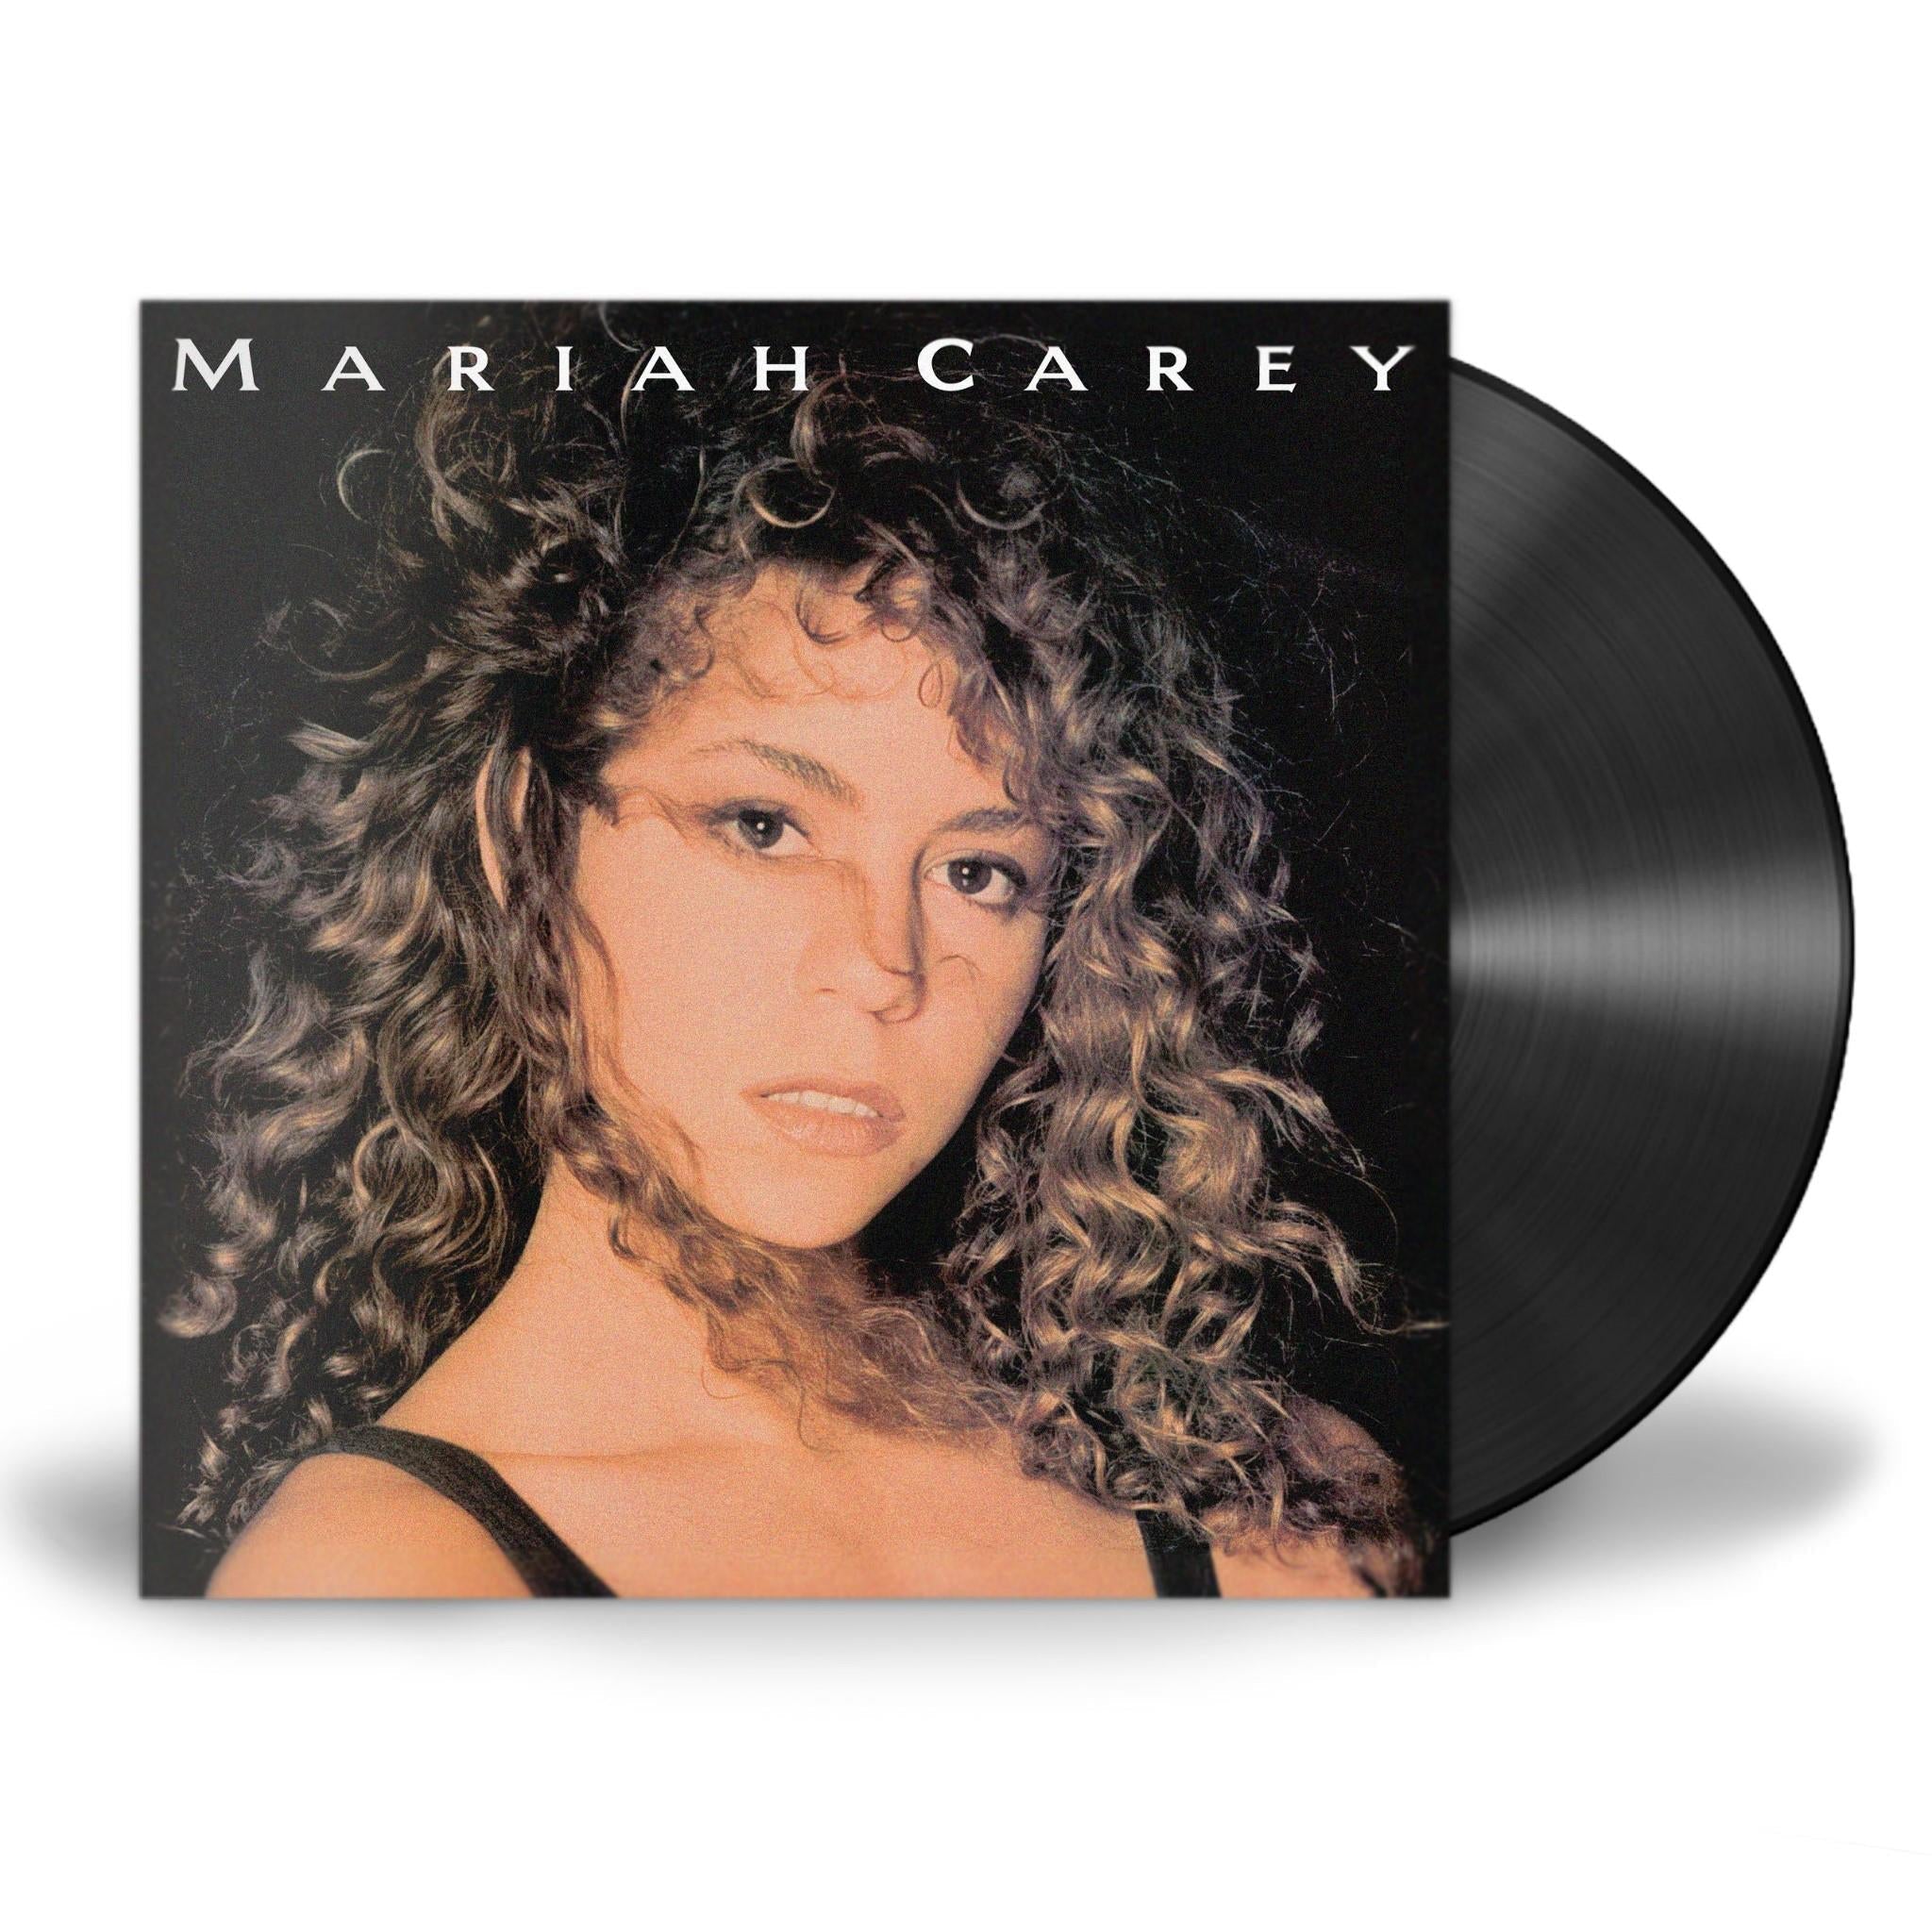 Mariah Carey - Mariah Carey Vinilo